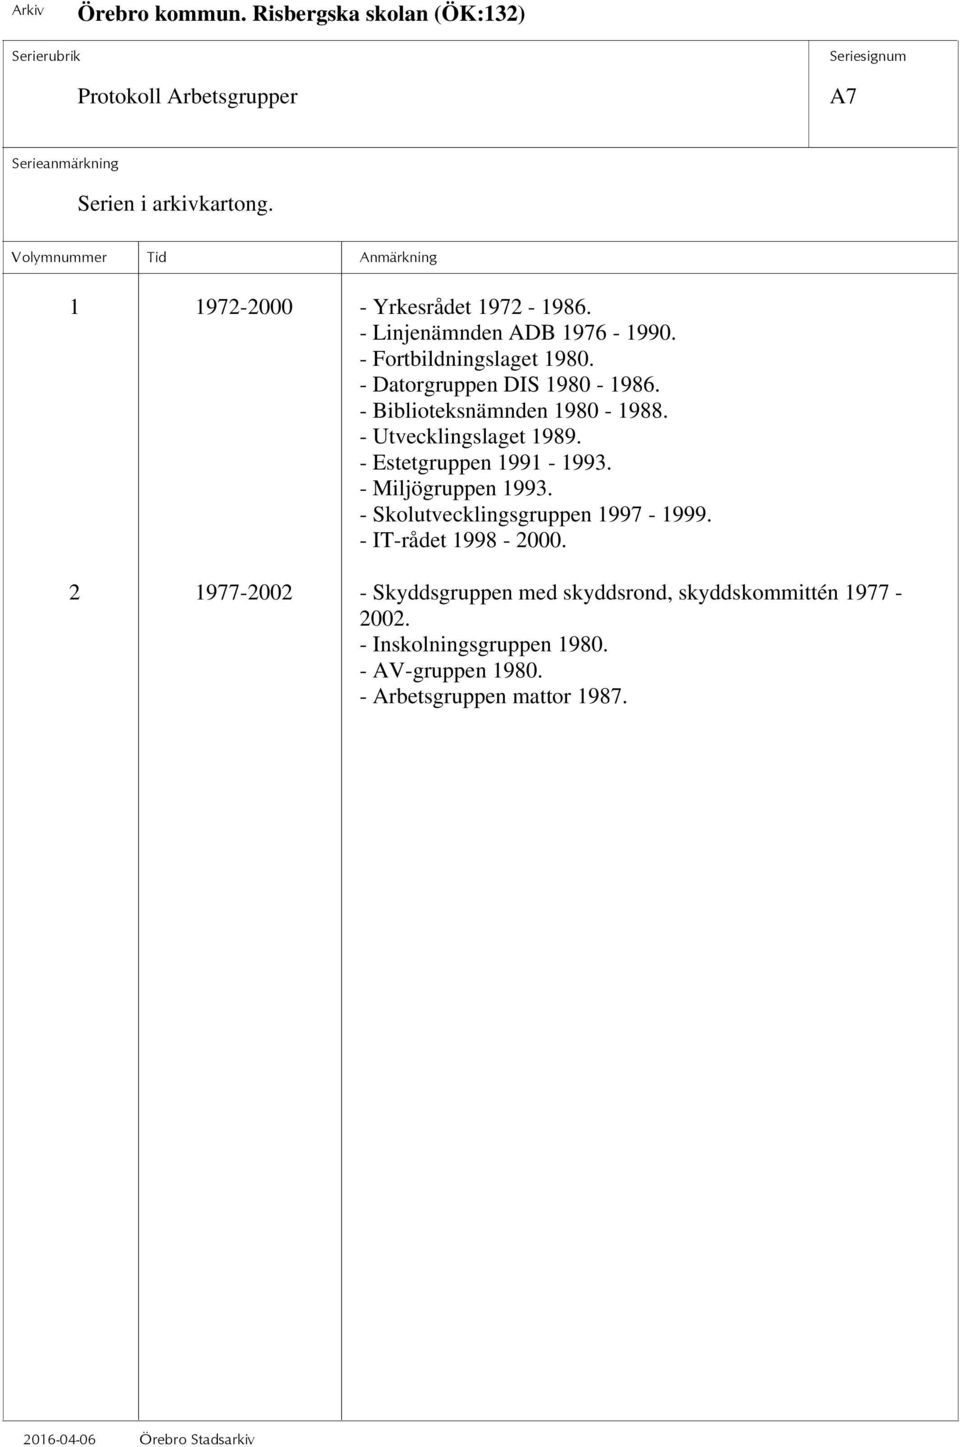 - Utvecklingslaget 1989. - Estetgruppen 1991-1993. - Miljögruppen 1993. - Skolutvecklingsgruppen 1997-1999.